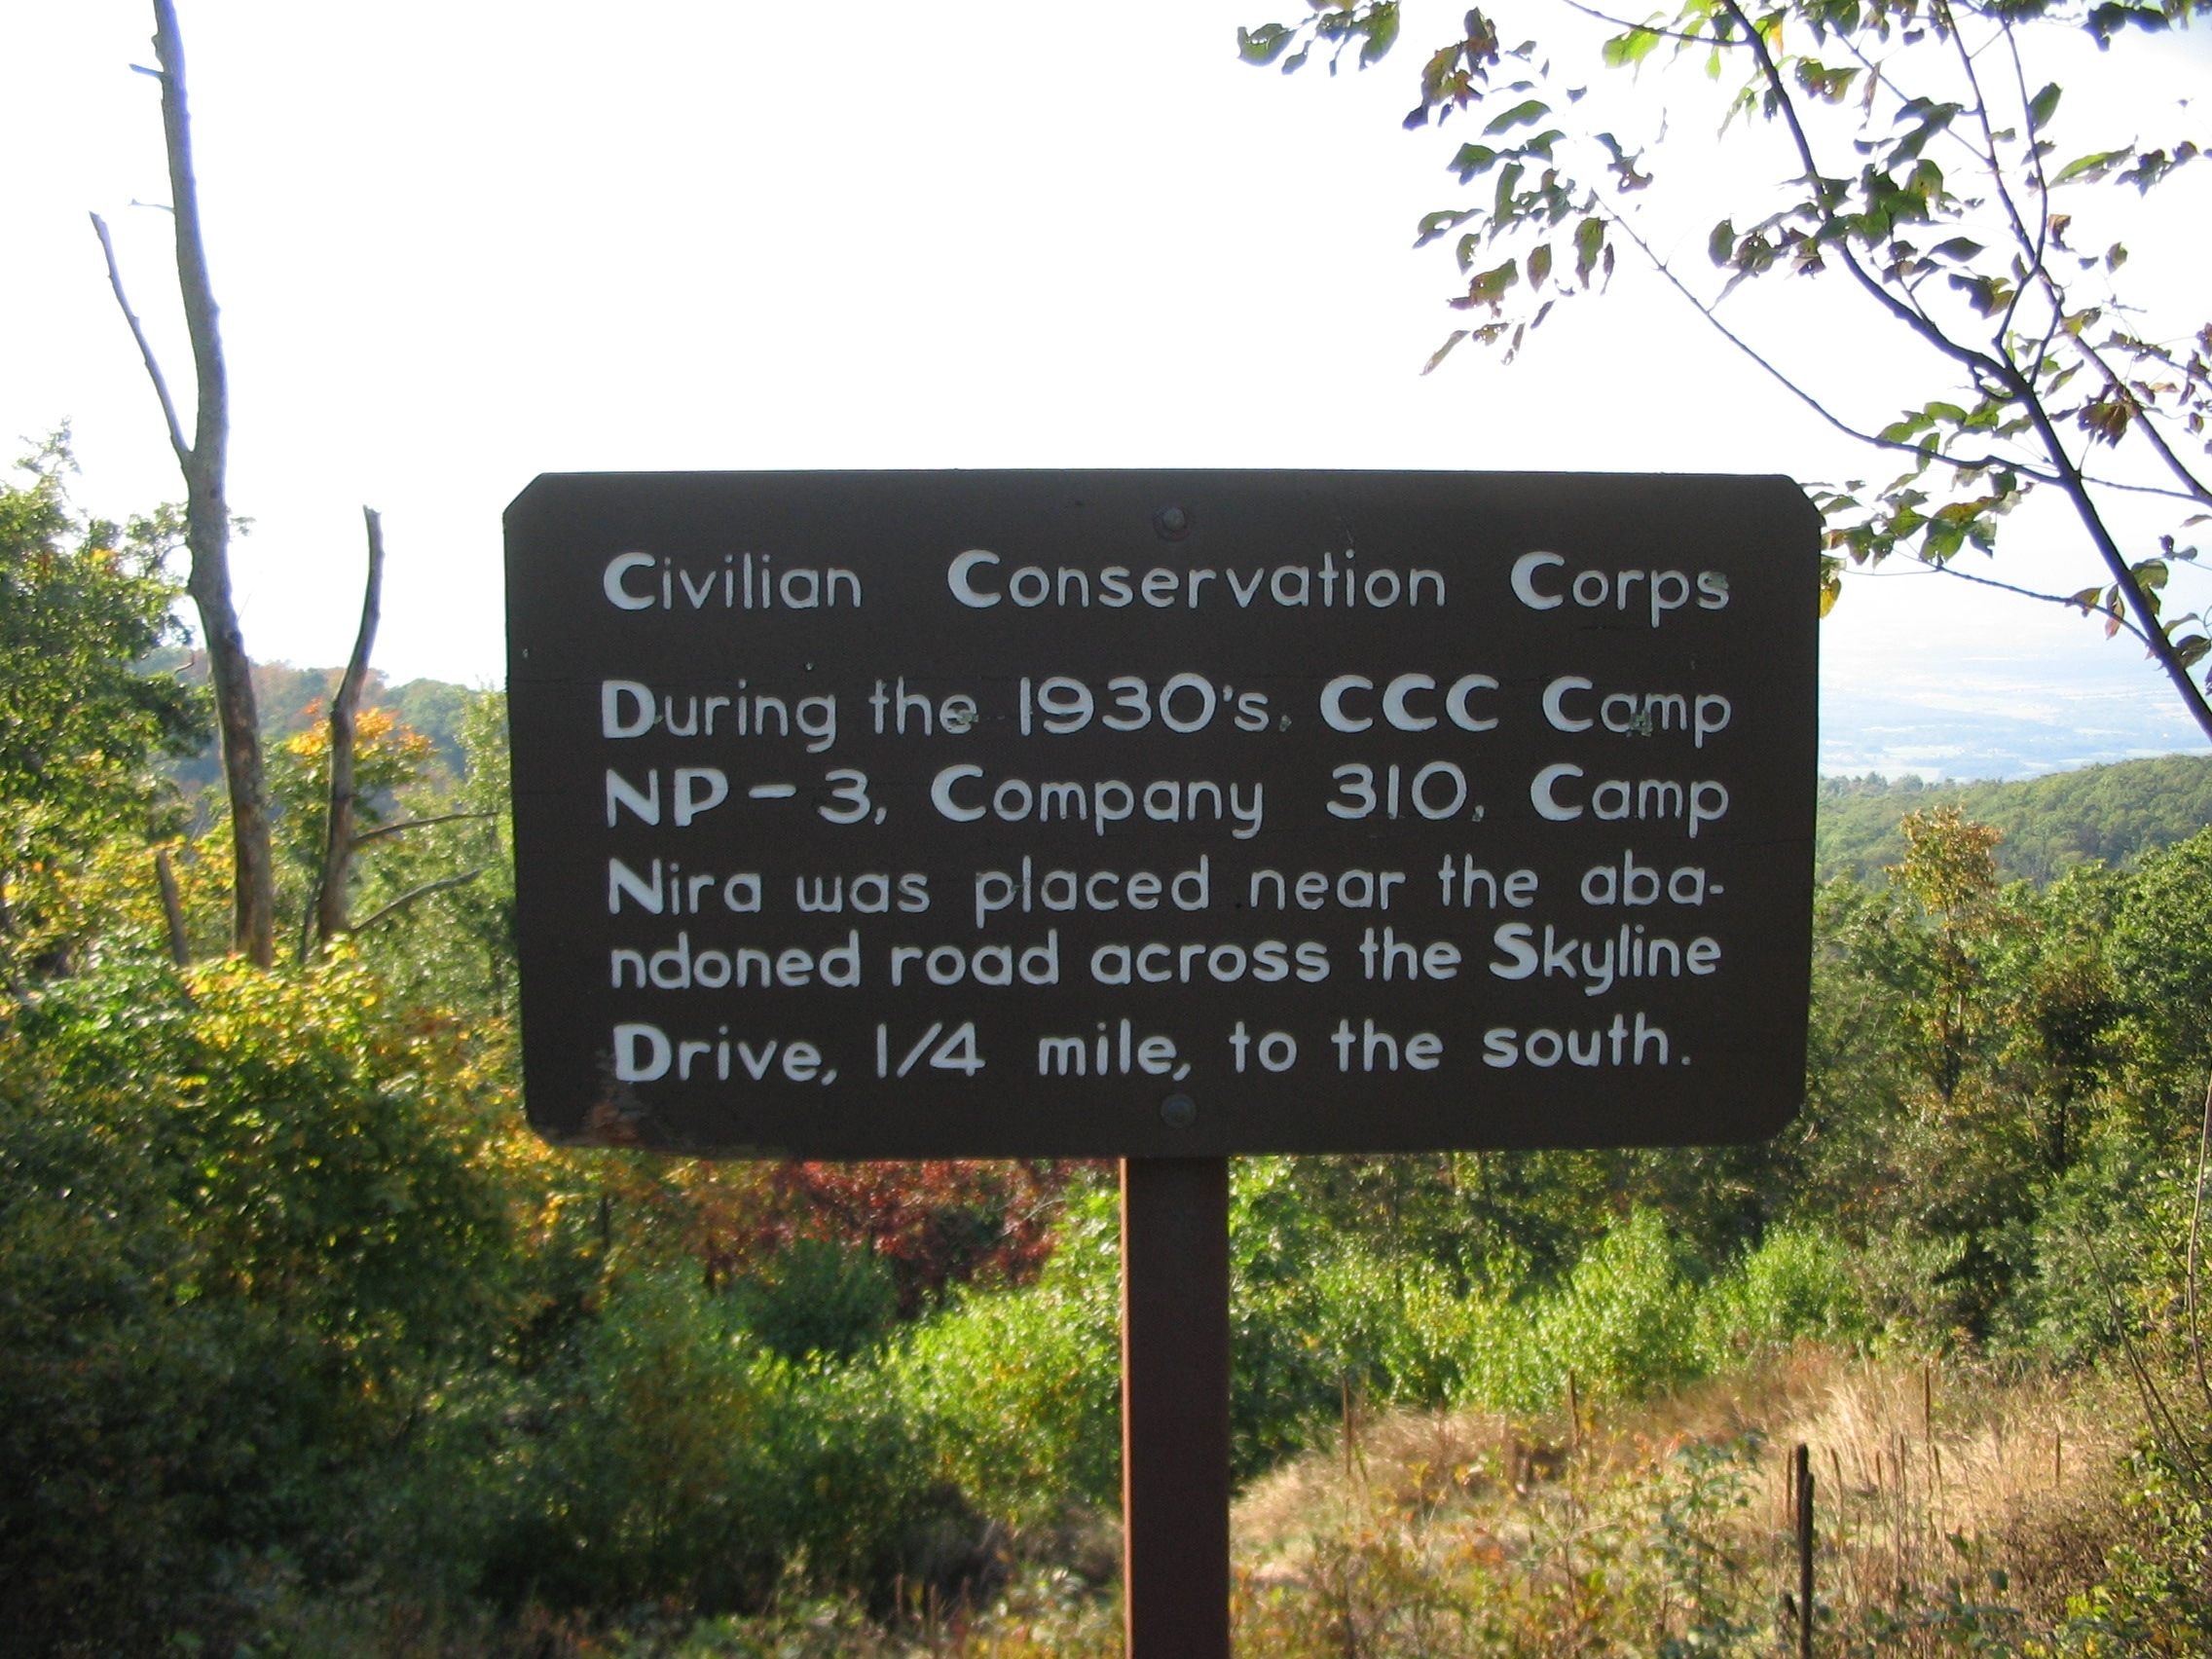 Civilian Conservation Corps Marker